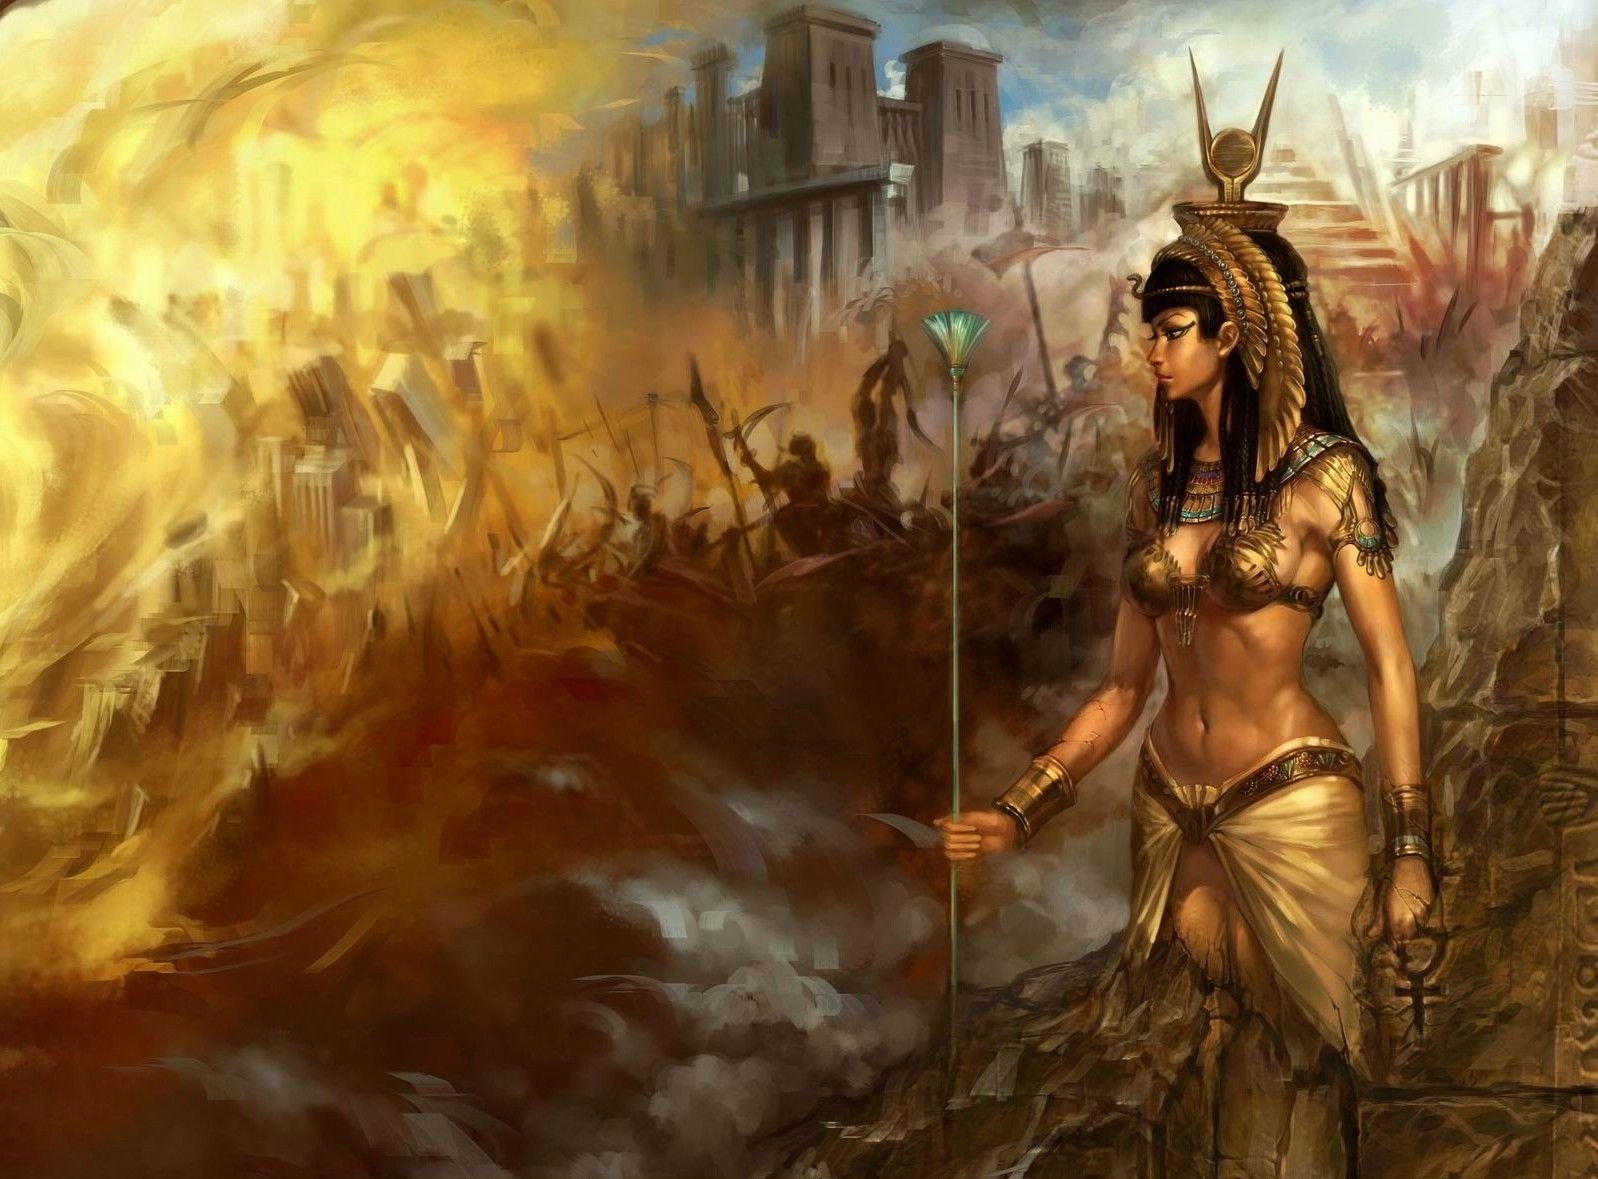 Wallpaper, fantasy art, artwork, Egyptian, mythology, screenshot, computer wallpaper, pc game, woman warrior, 1598x1179 px 1598x1179